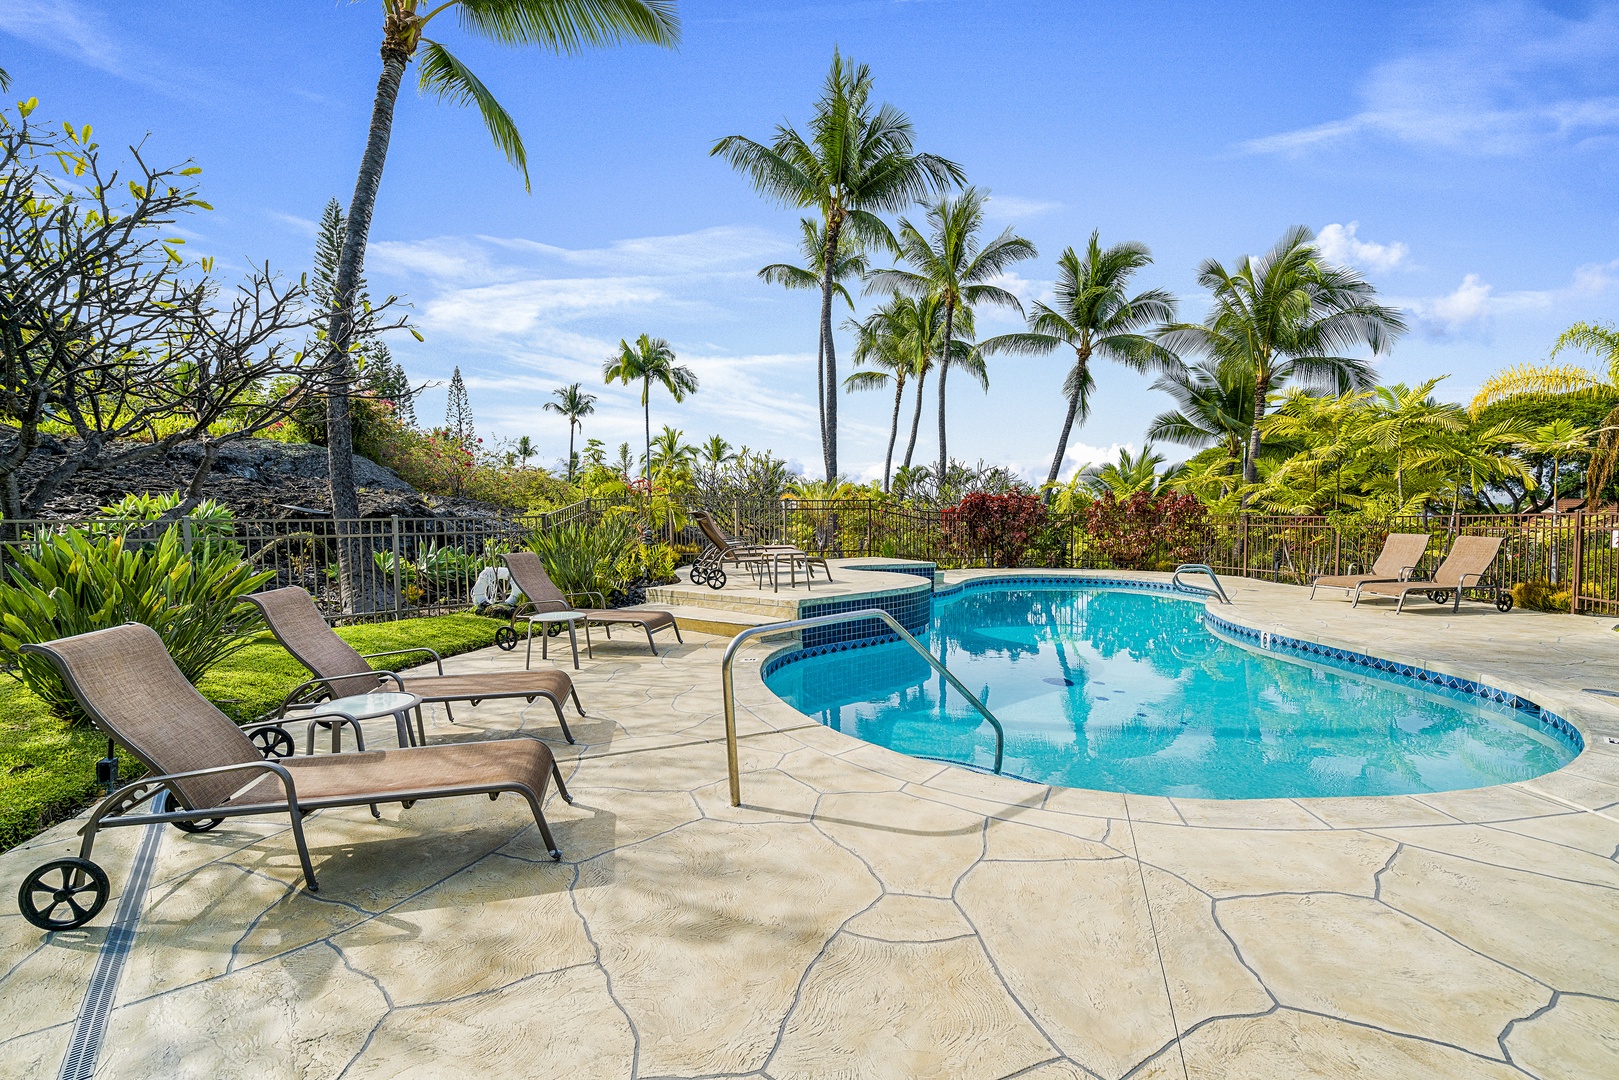 Kailua-Kona Vacation Rentals, Keauhou Resort 116 - Complex Pool offers a relaxing environment